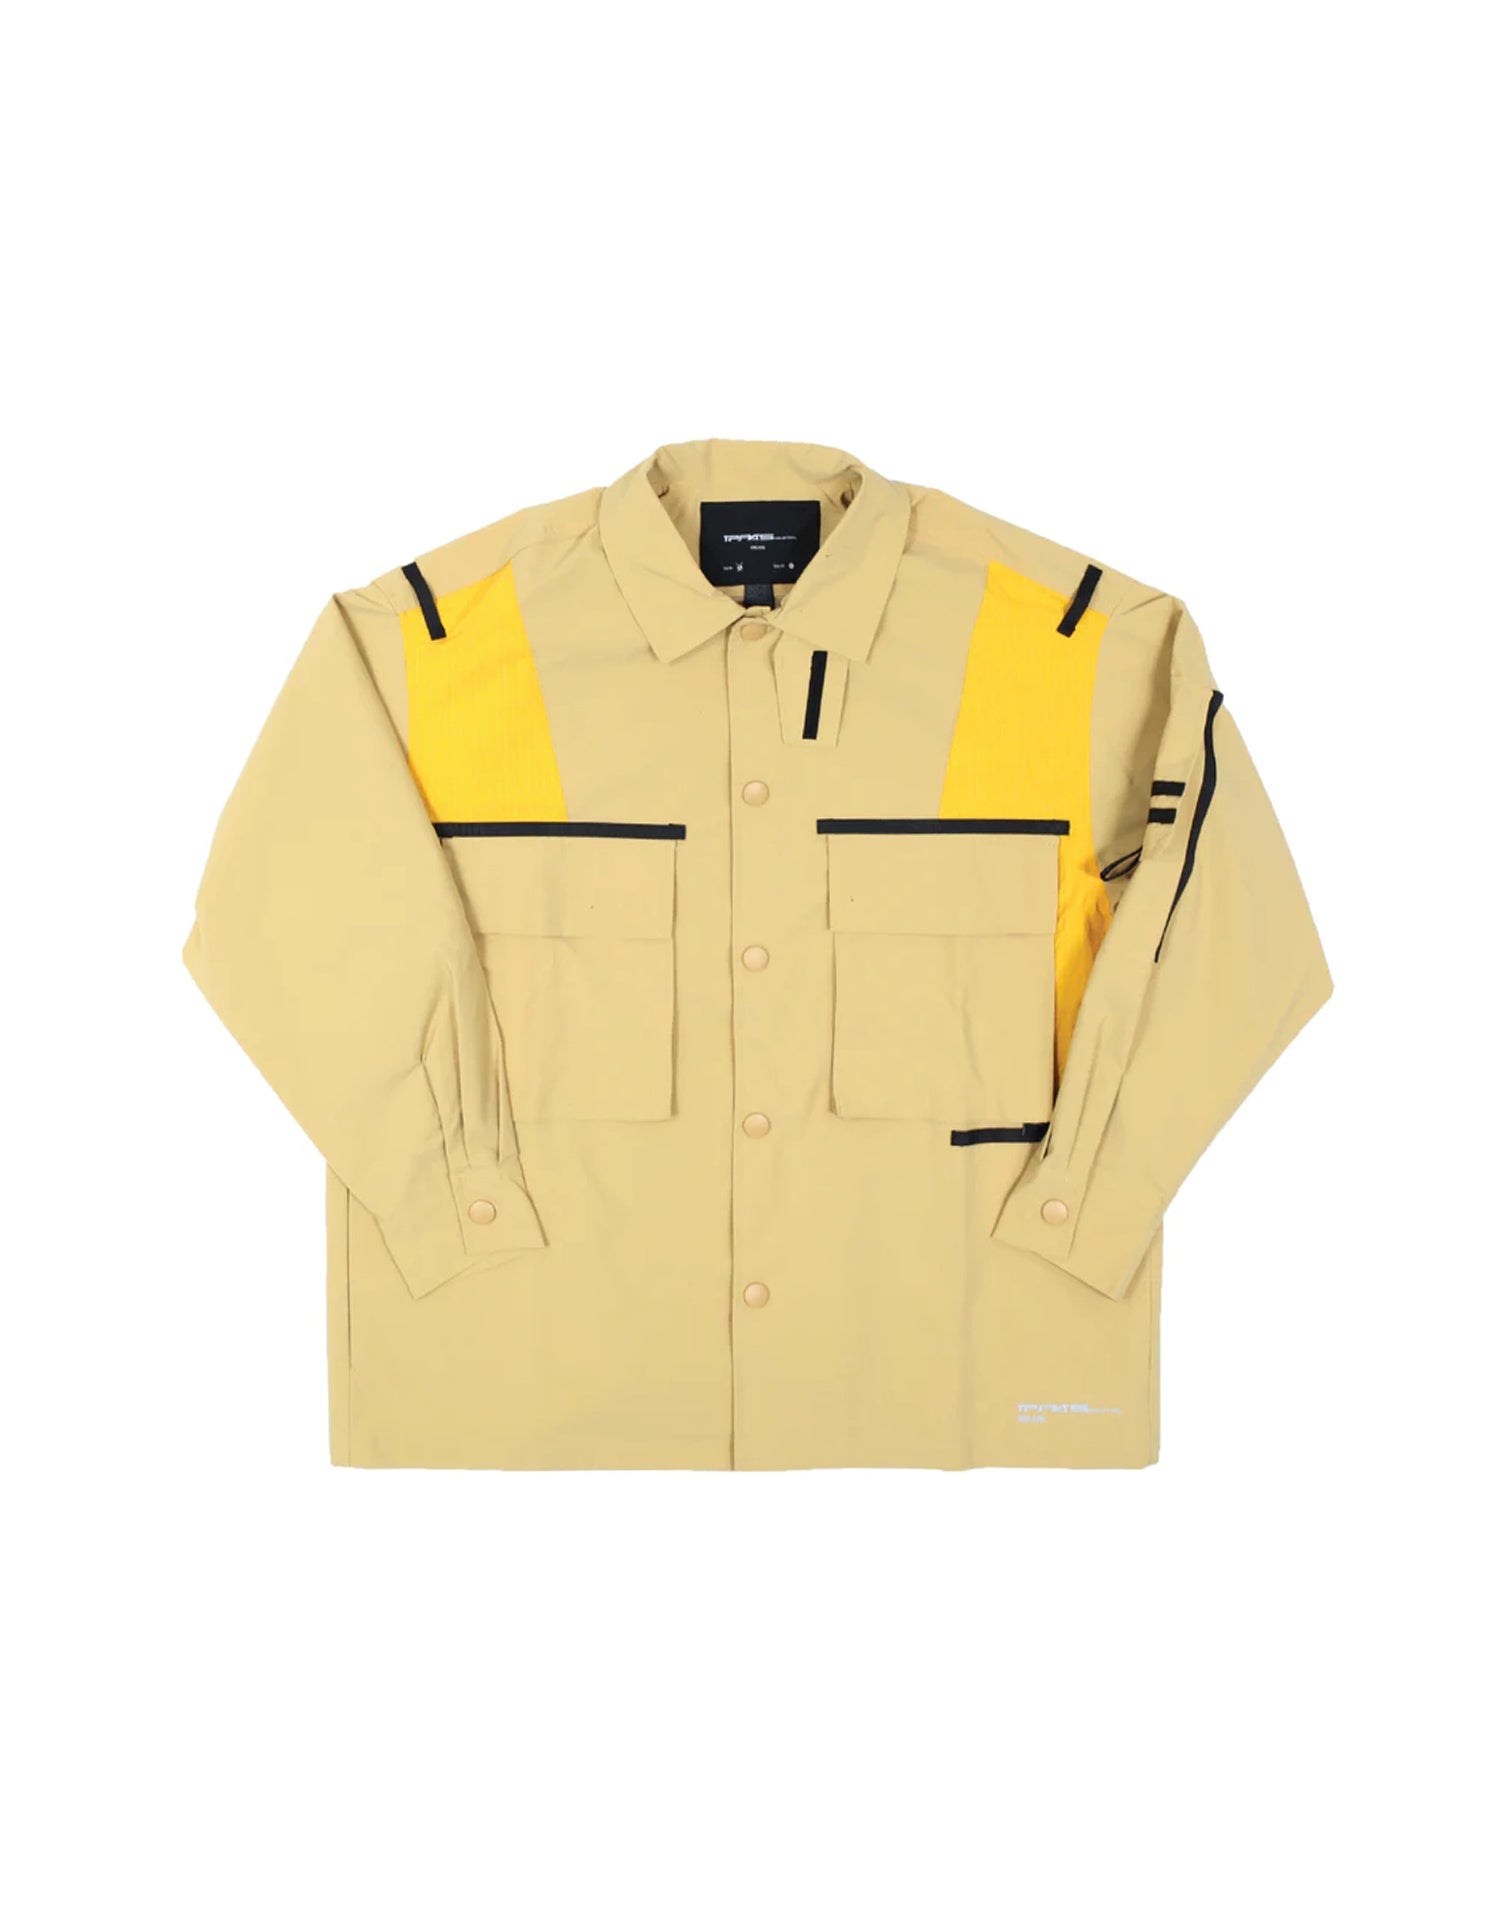 Ip-Axis Industrial Functional Shirt Jacket